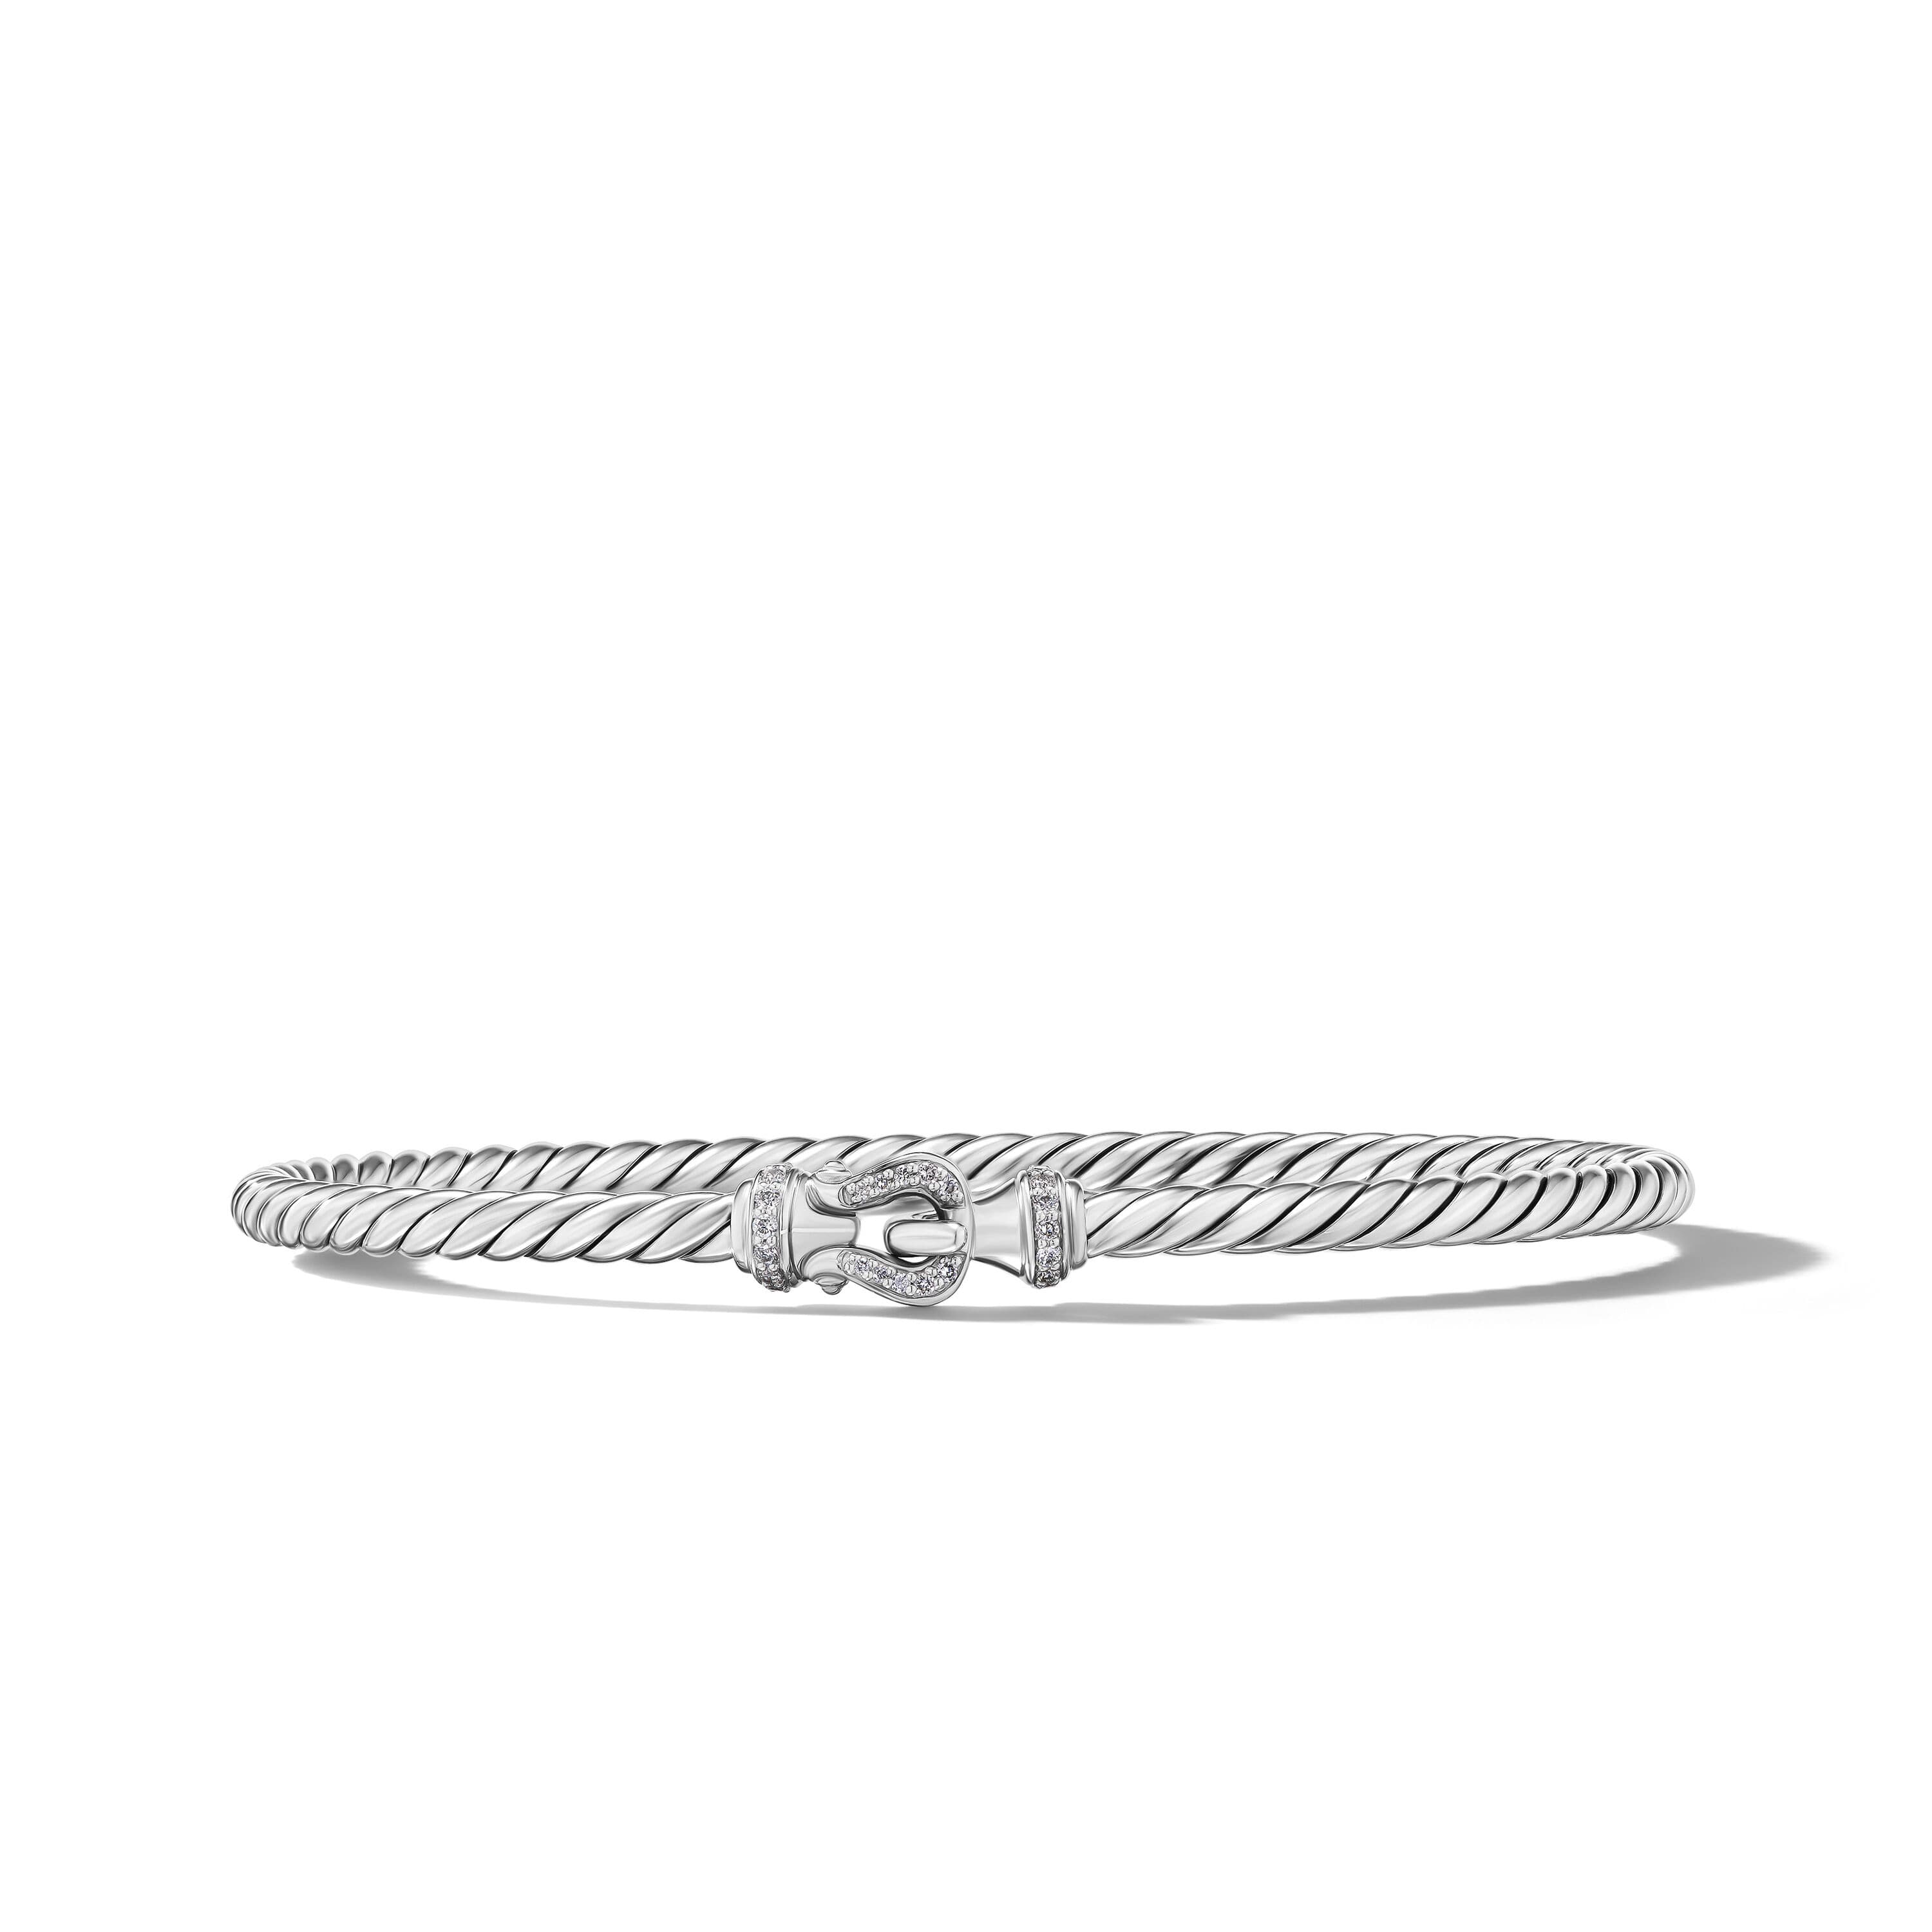 David Yurman 3mm Buckle Bracelet in Sterling Silver with Diamonds, Size Large 0